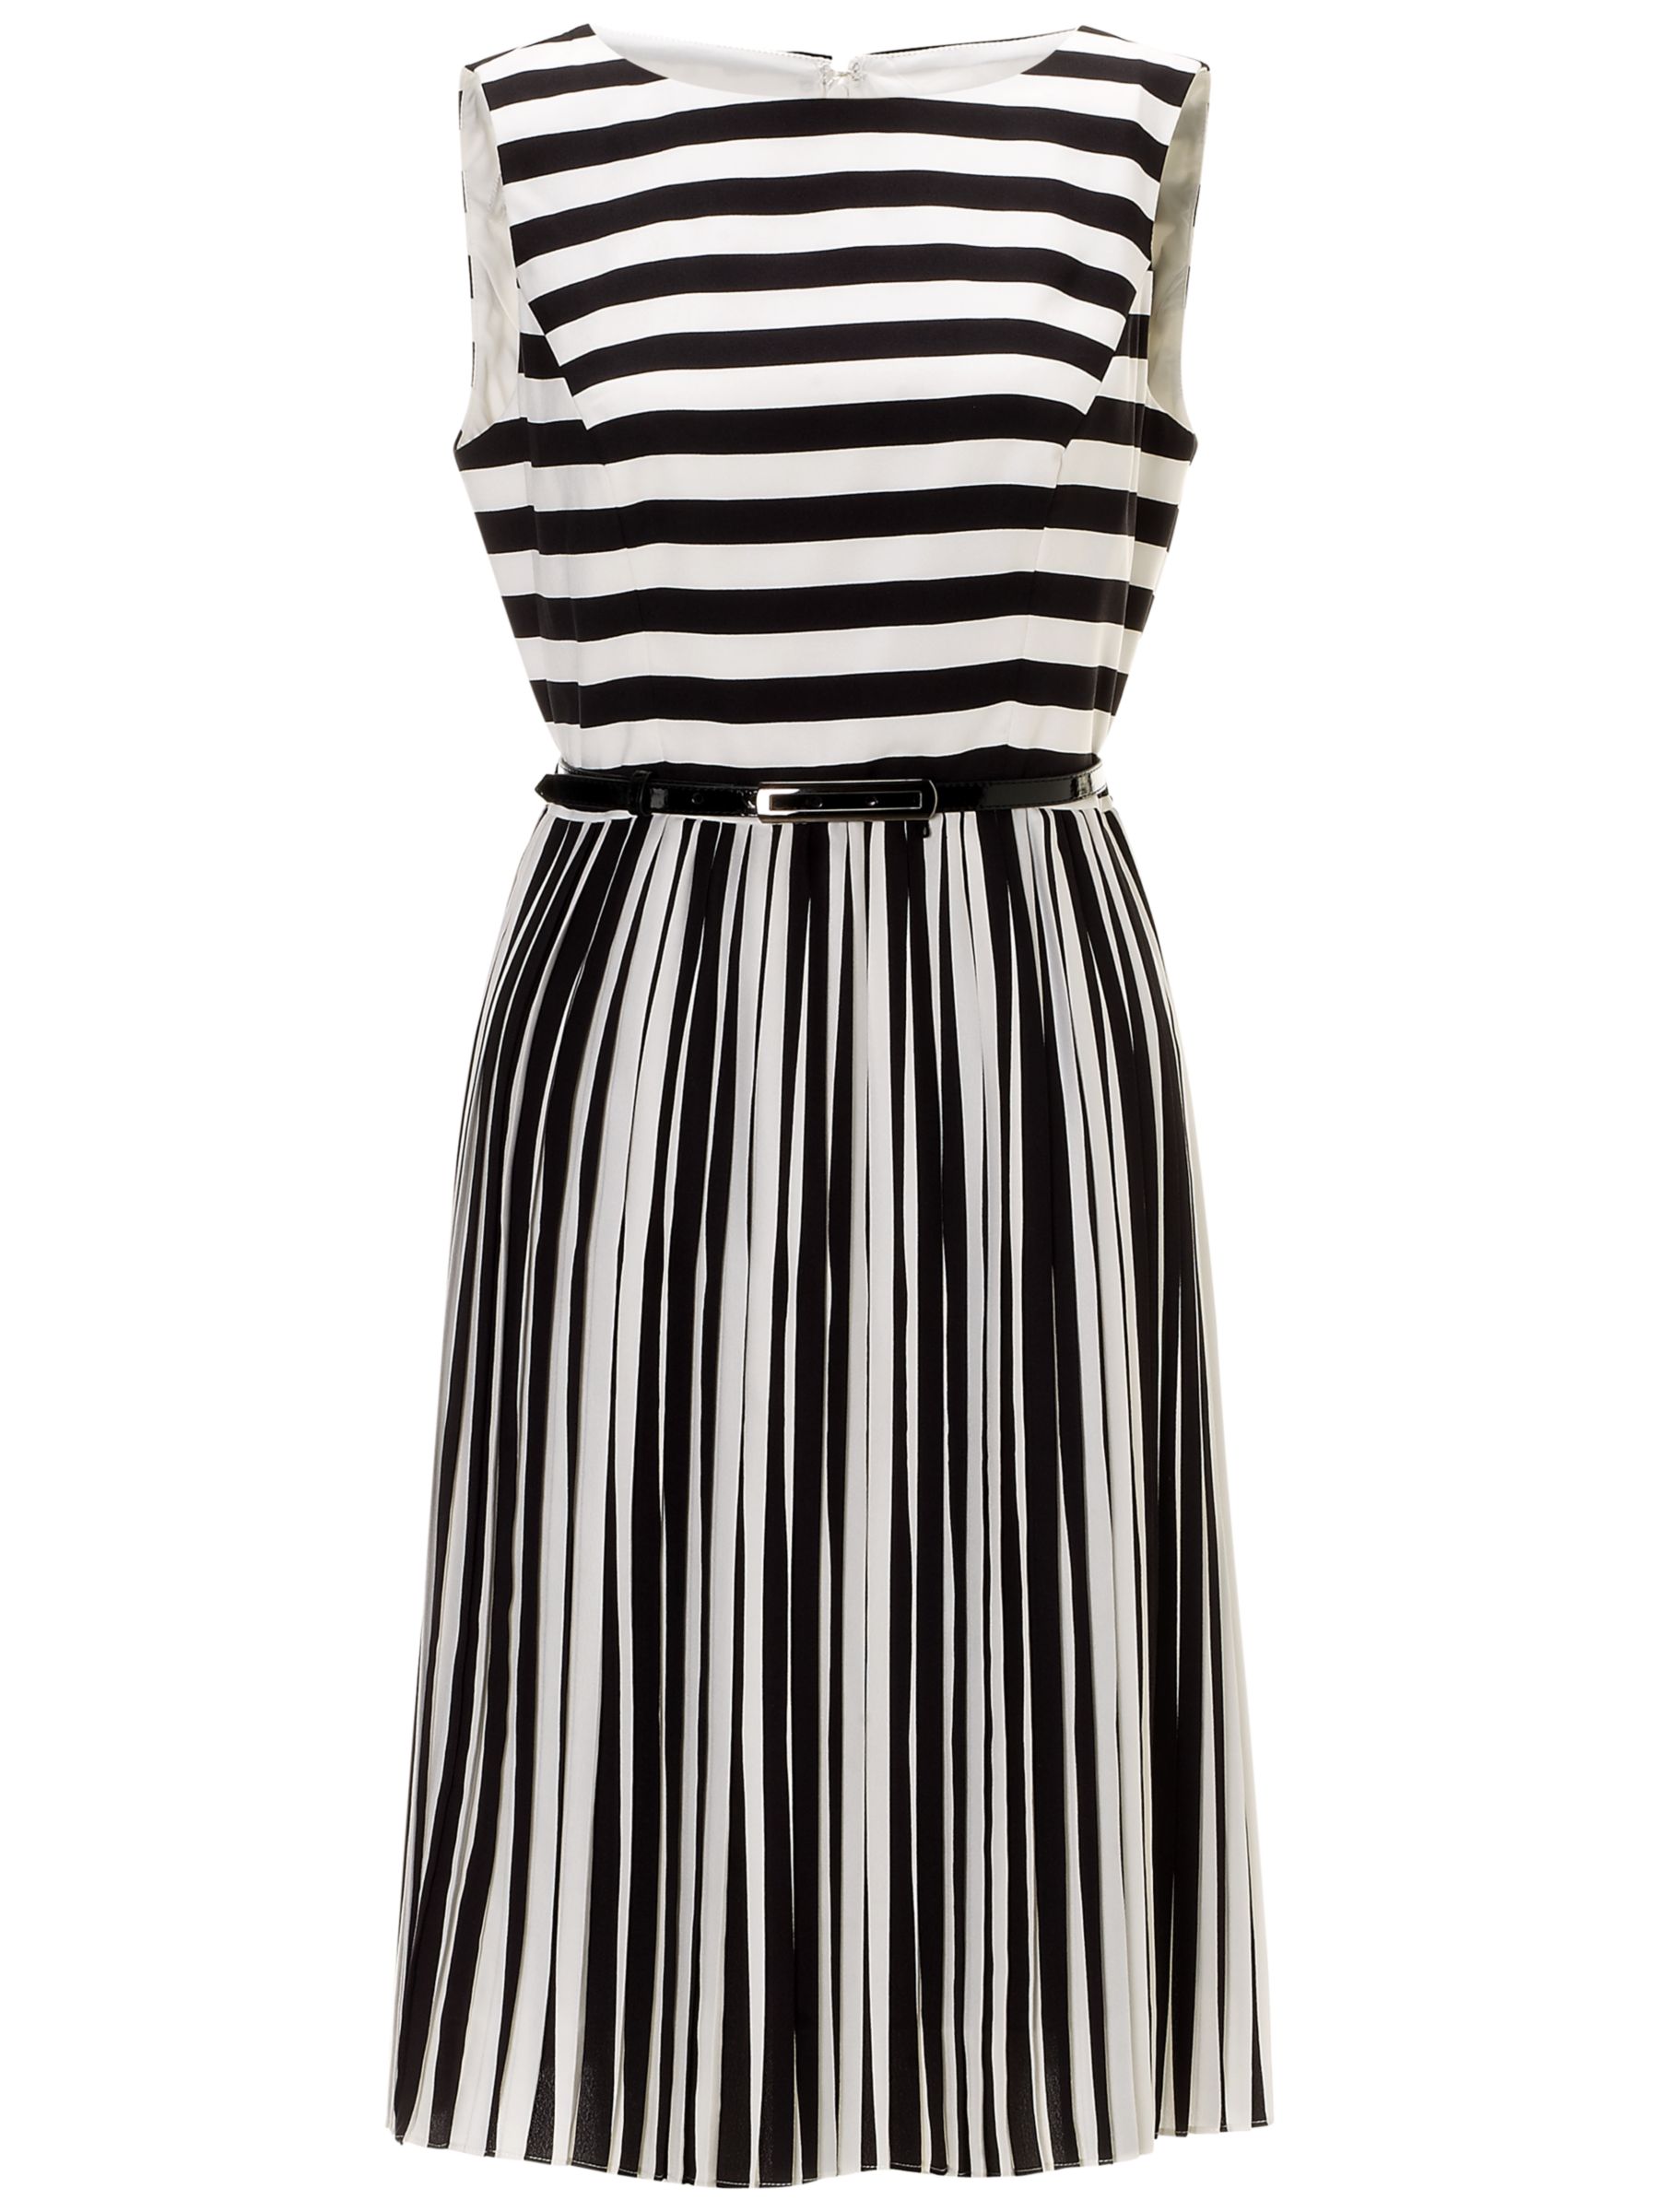 Adrianna Papell Stripe Chiffon Dress, Black/White